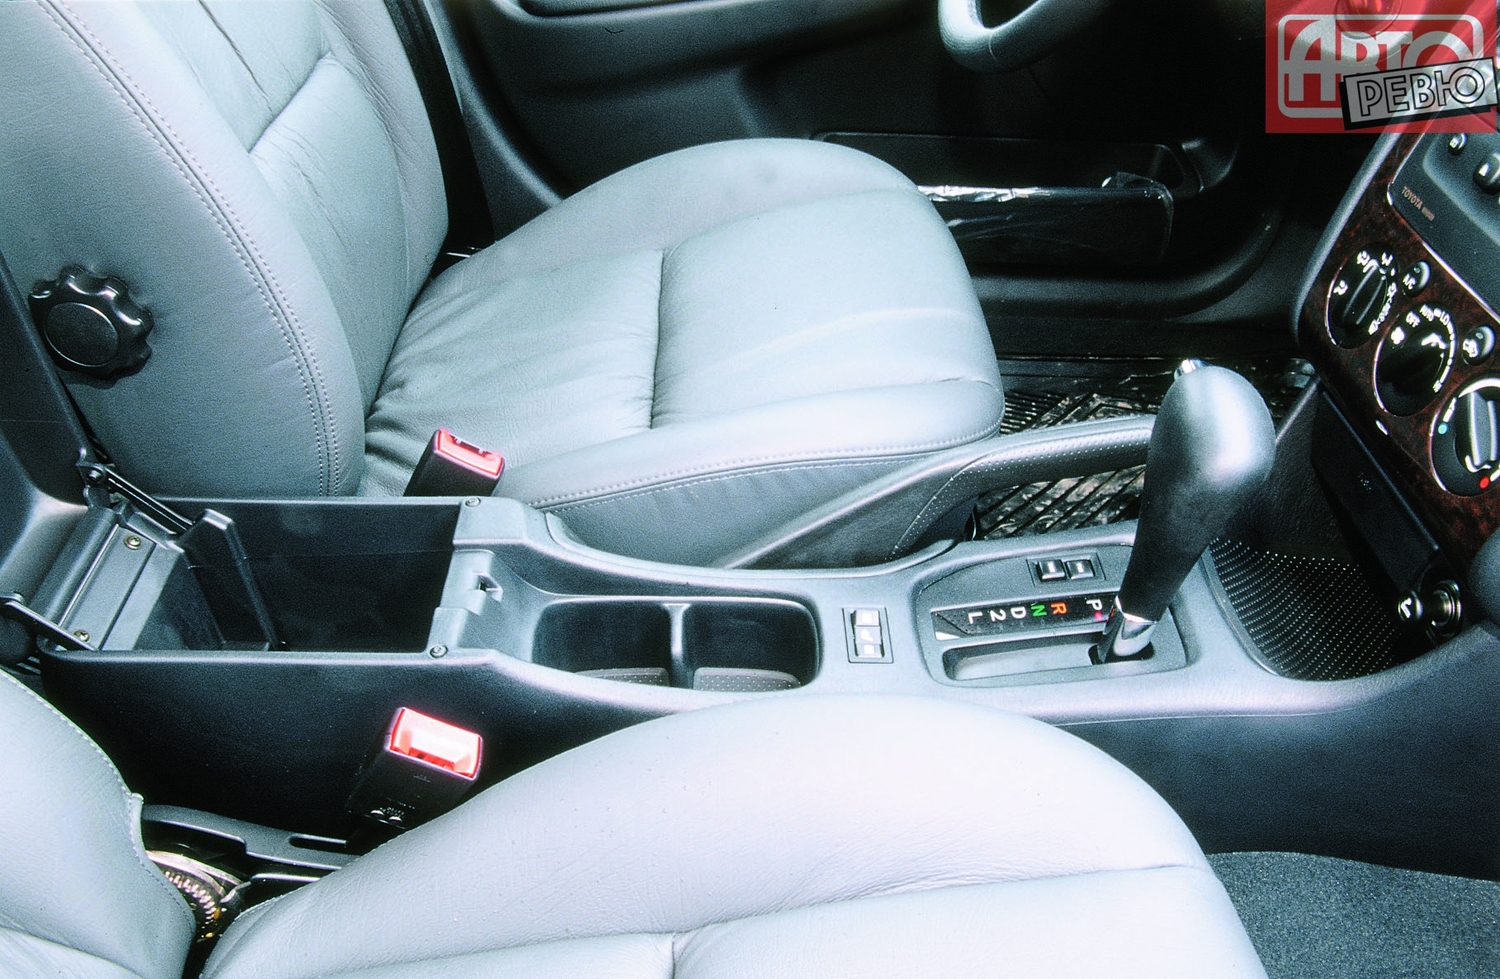 седан Toyota Avensis 2000 - 2003г выпуска модификация 1.6 MT (110 л.с.)